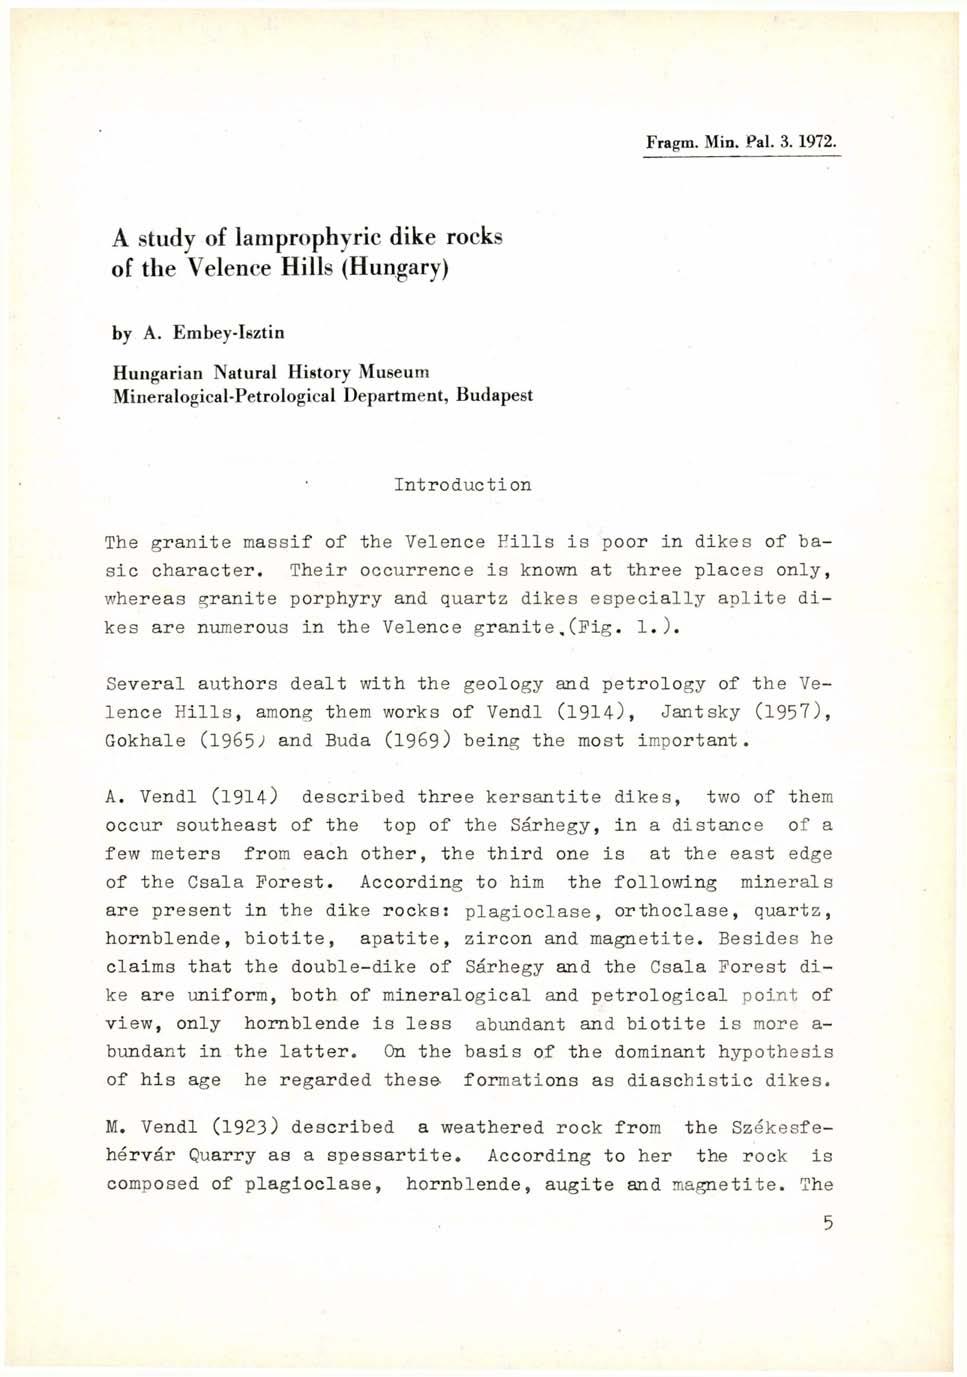 Fragm. Min. Pal. 3. 1972. A study of lamprophyric dike rocks of the Velence Hills (Hungary) by A.